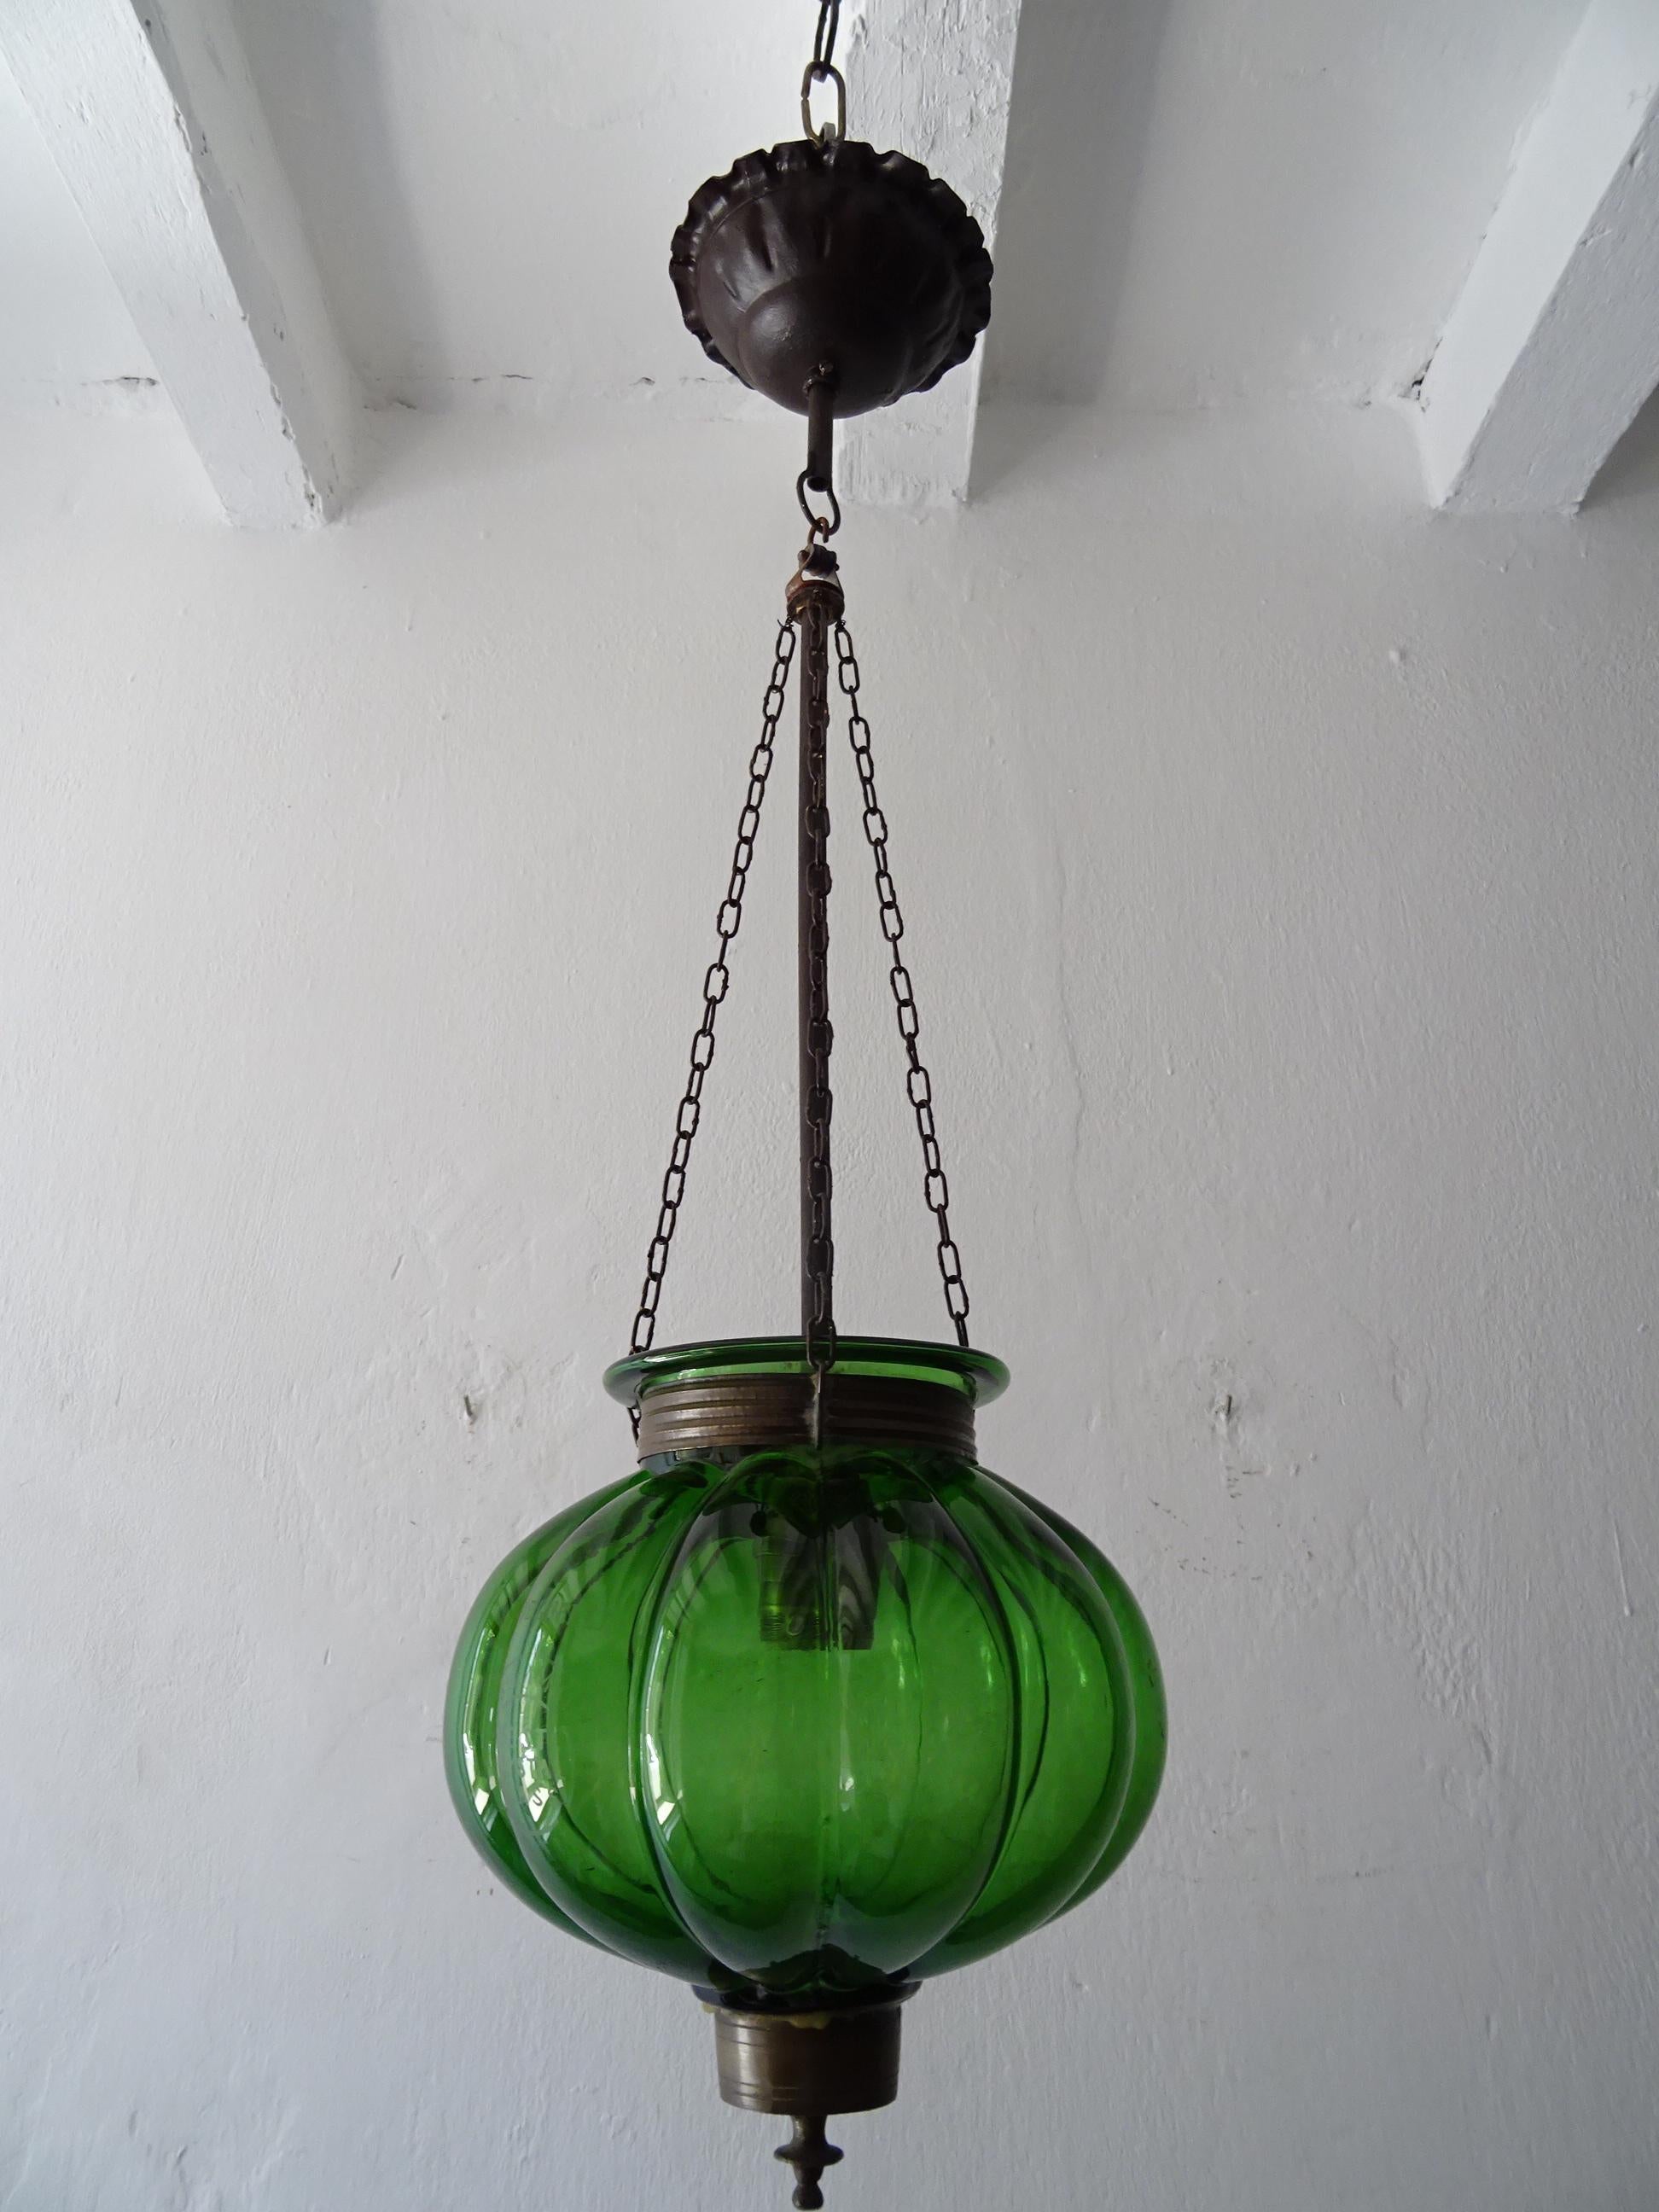 Rare green color. The lantern alone measures 9